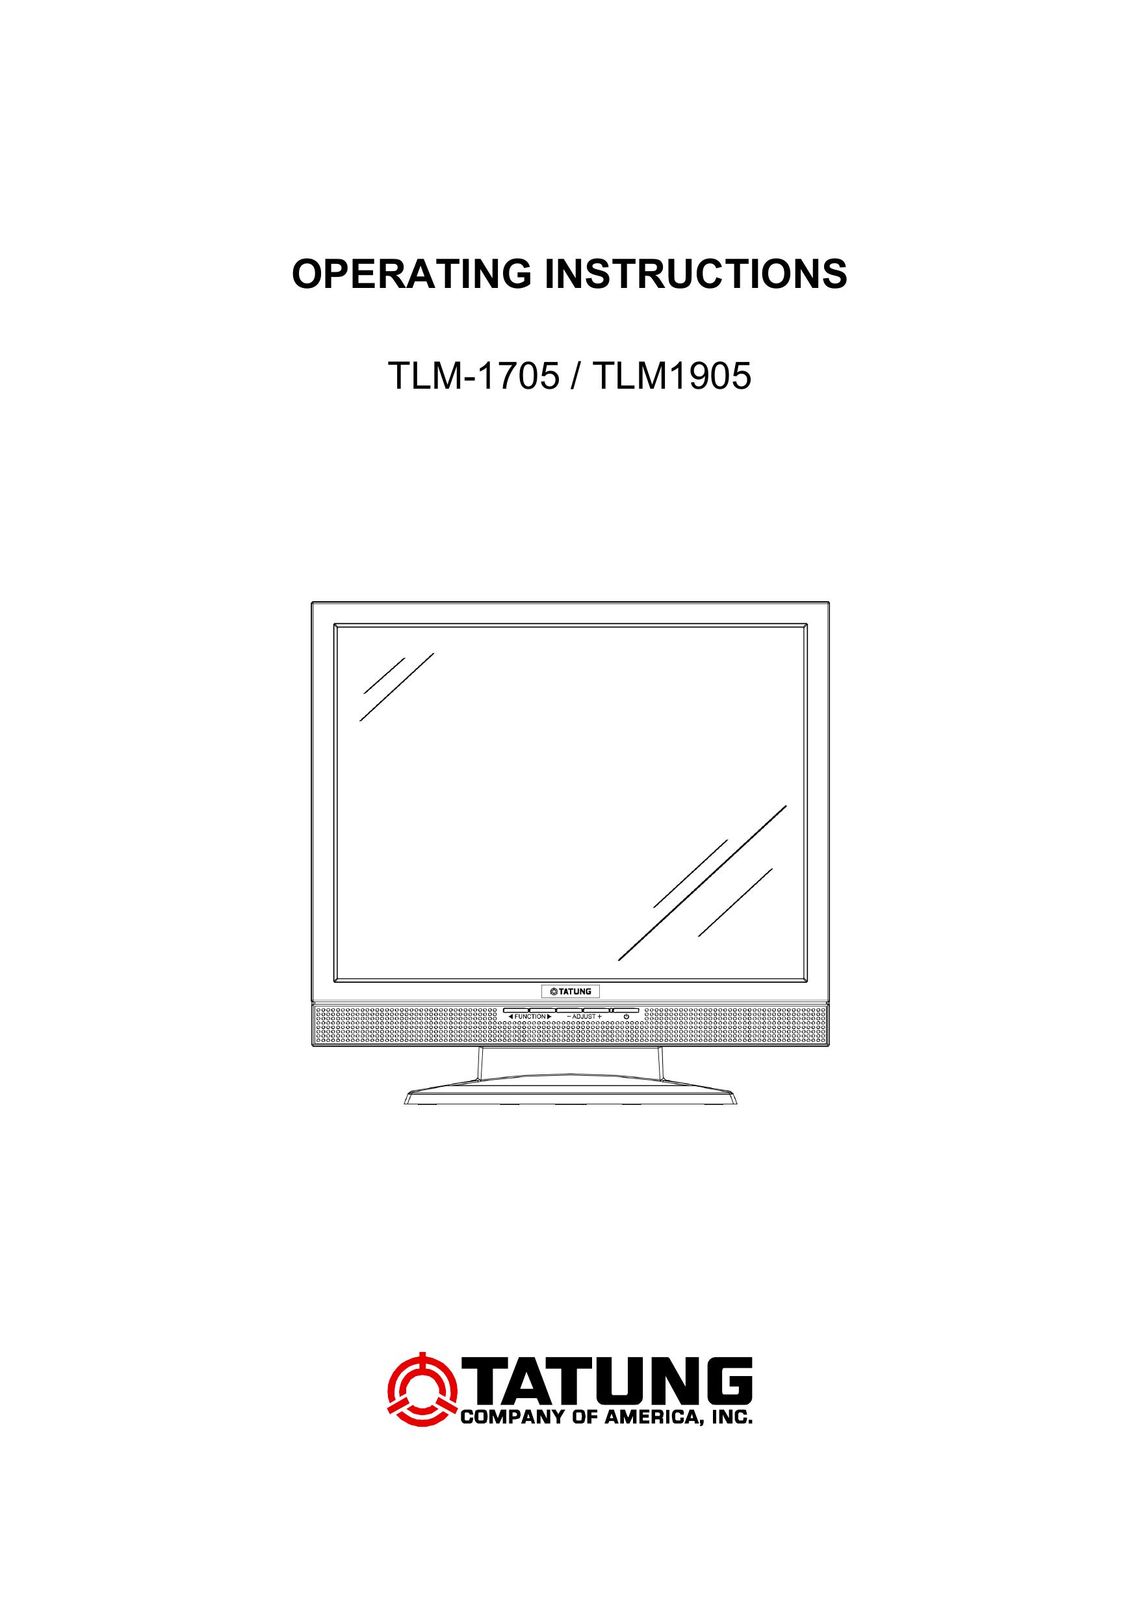 Tatung TLM1905 Flat Panel Television User Manual